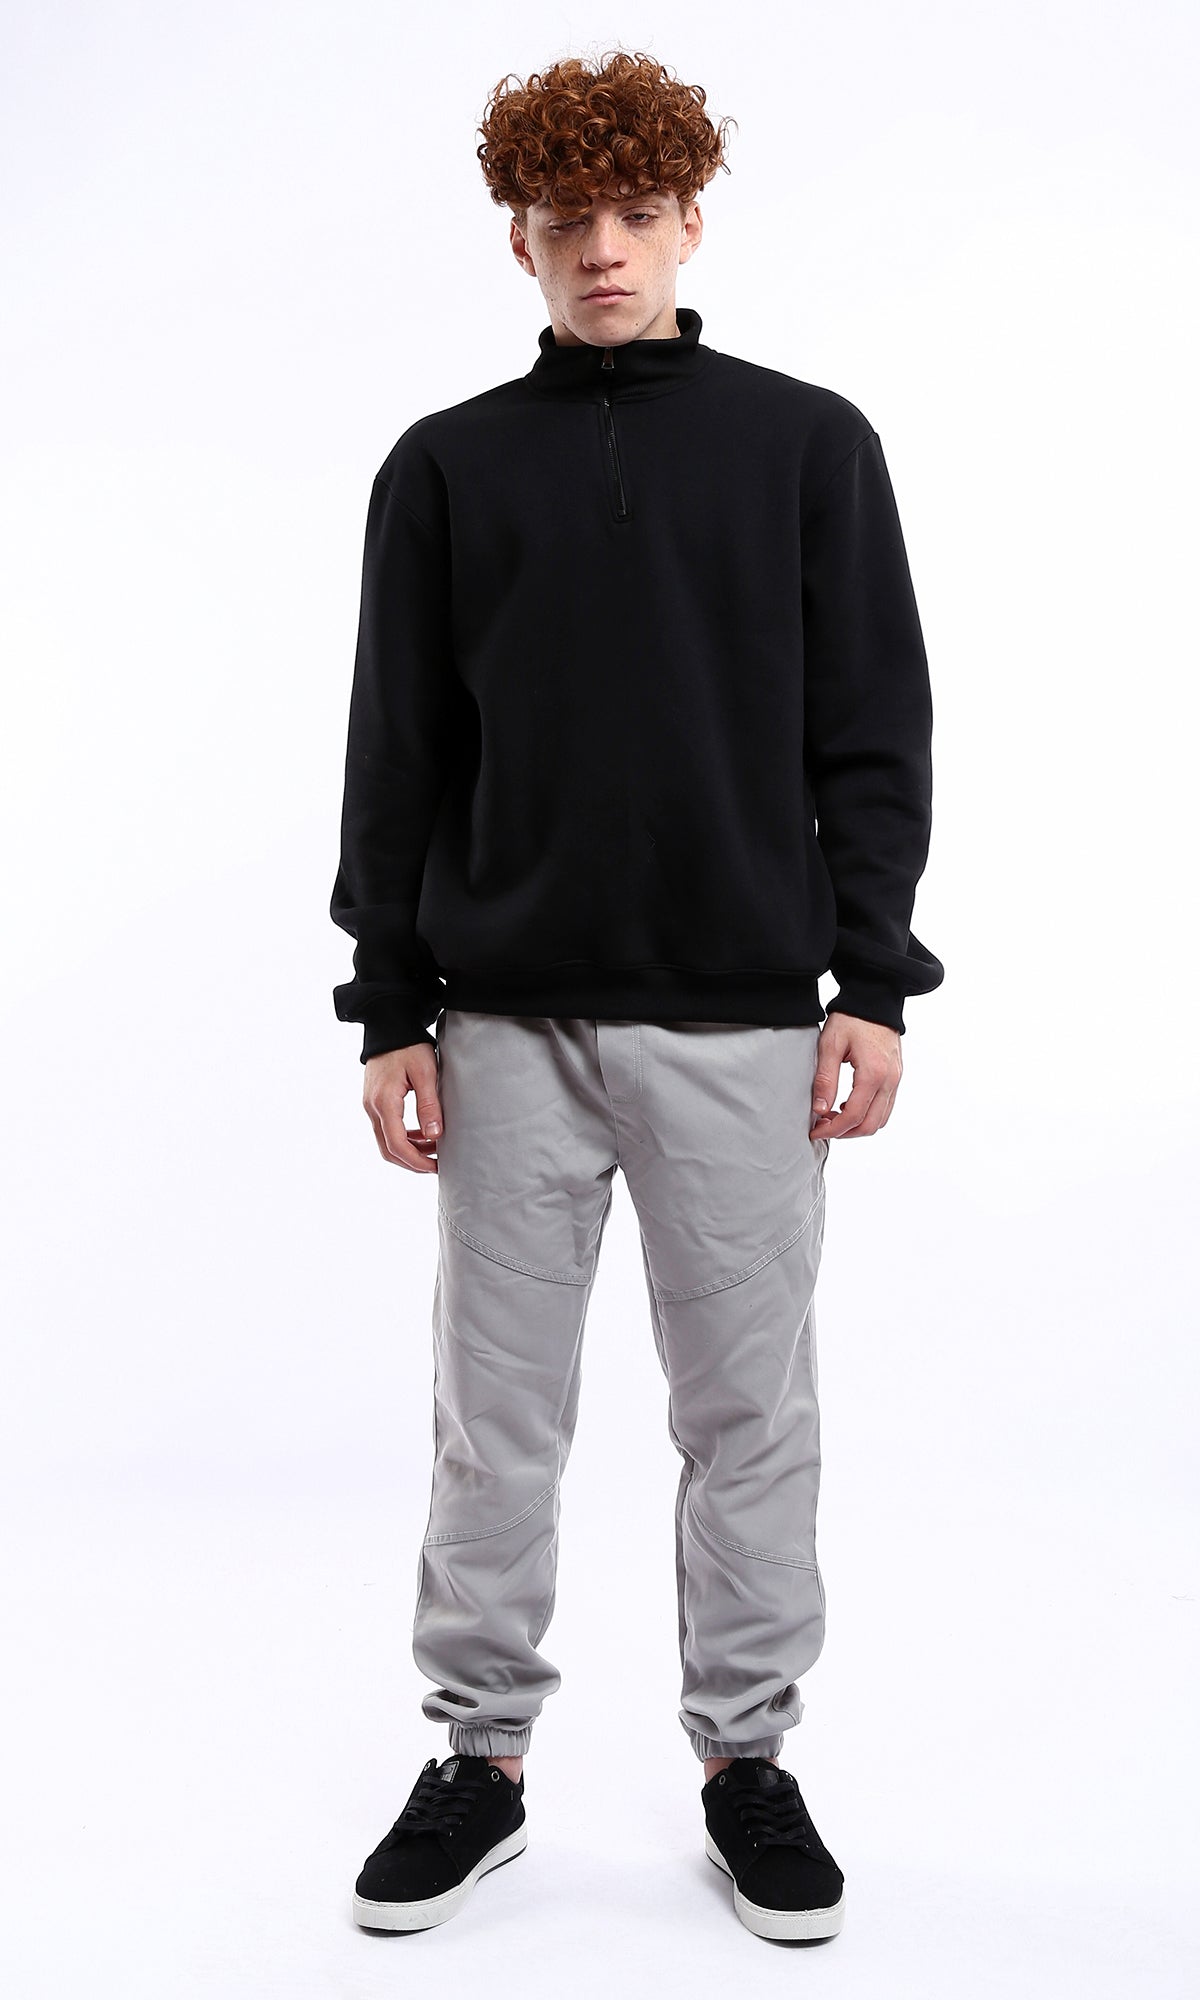 O176385 Zipped Stand Neck Black Solid Sweatshirt